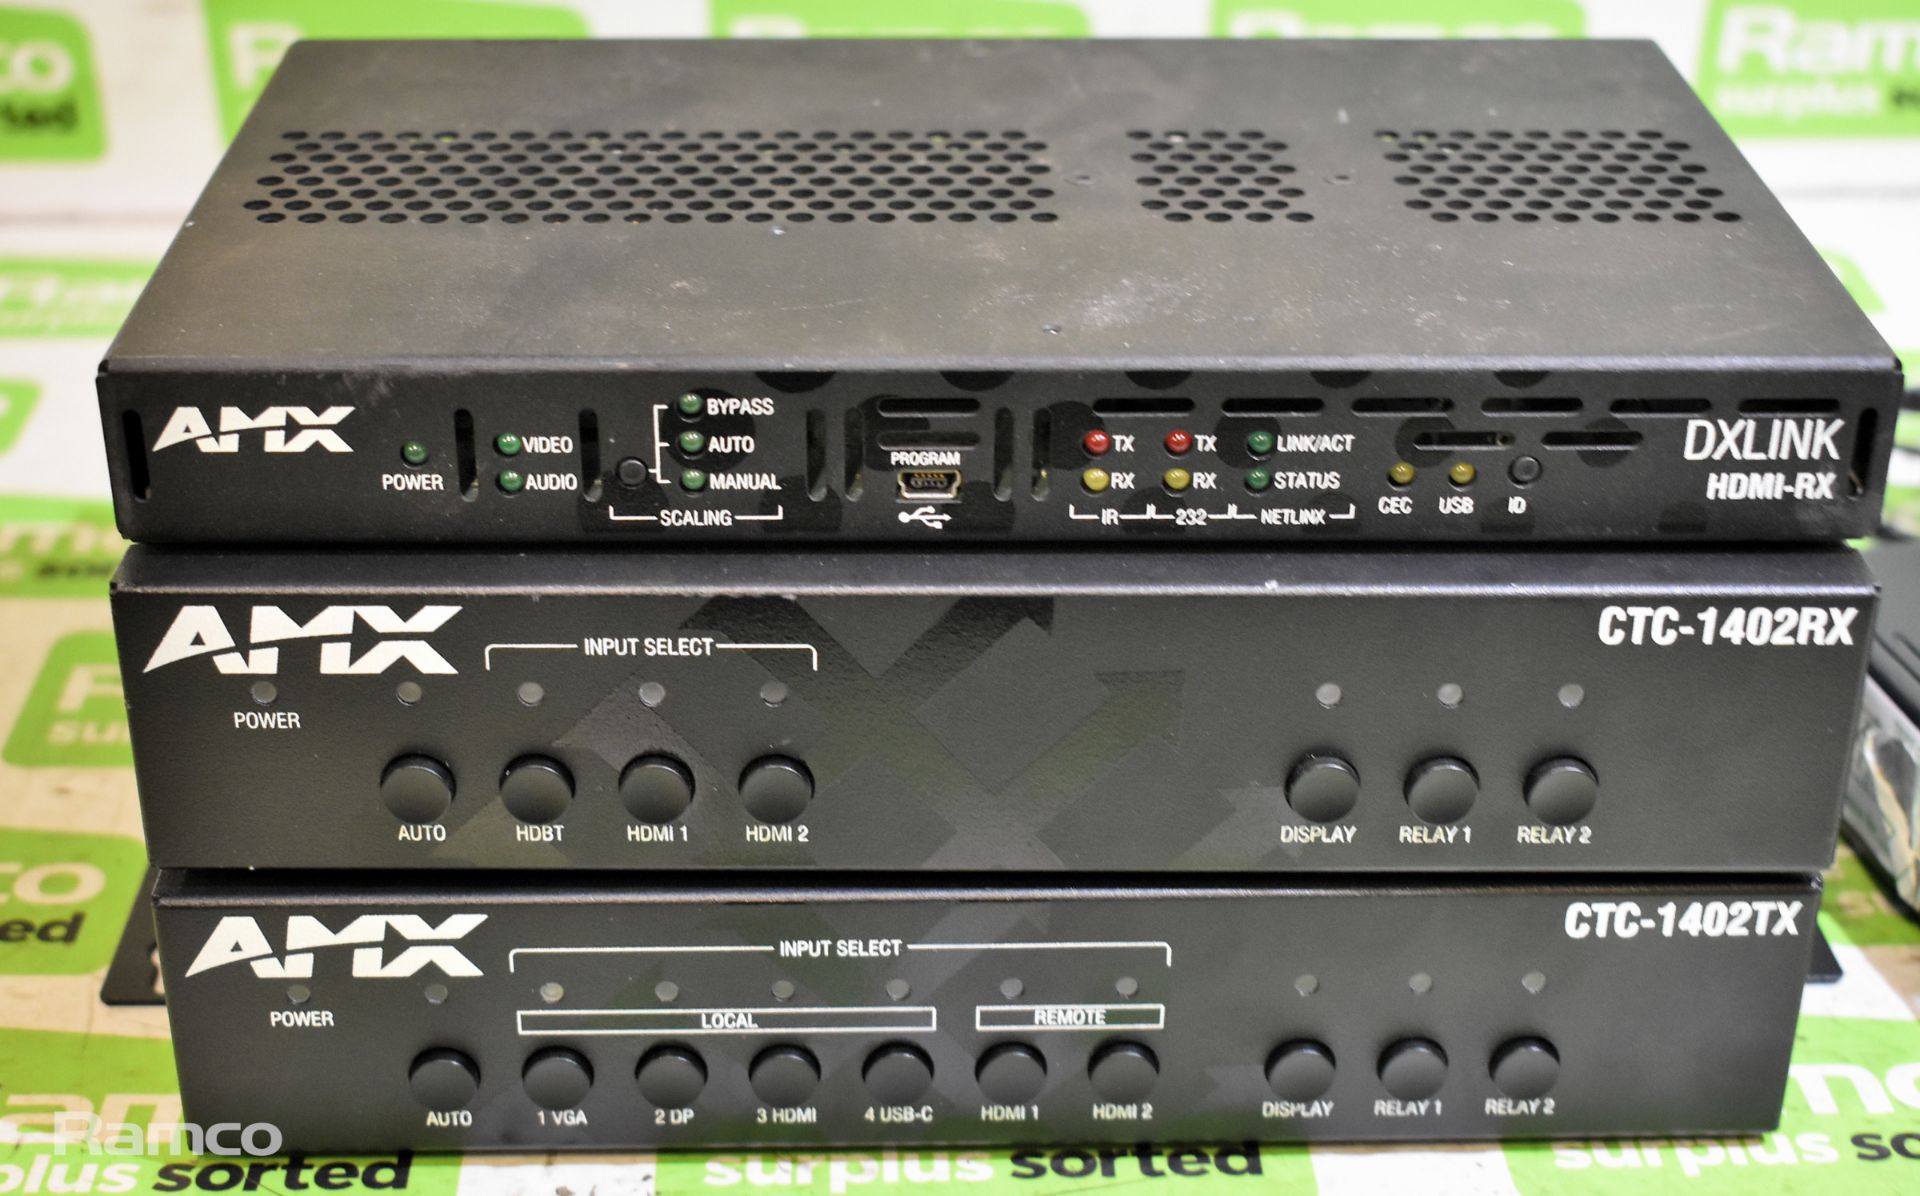 AMX CTC-1402 conferencing connectivity and transport kit, AMX FG1010-500 DXLink HDMI receiver module - Image 2 of 4